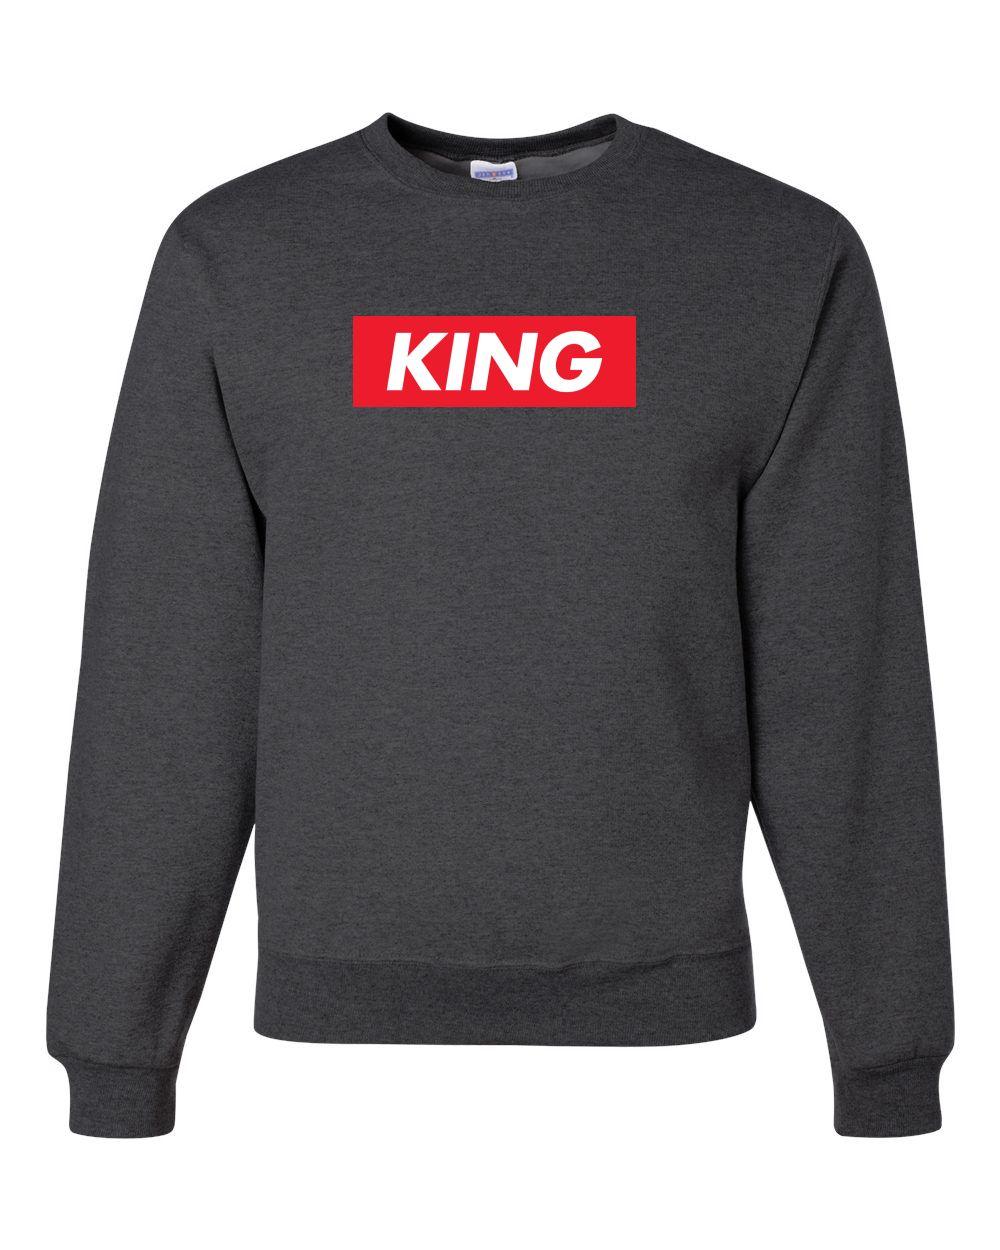 Savage King Logo - King Red Box Savage Logo Mens Sweatshirt Birthday Anniversary Gift ...